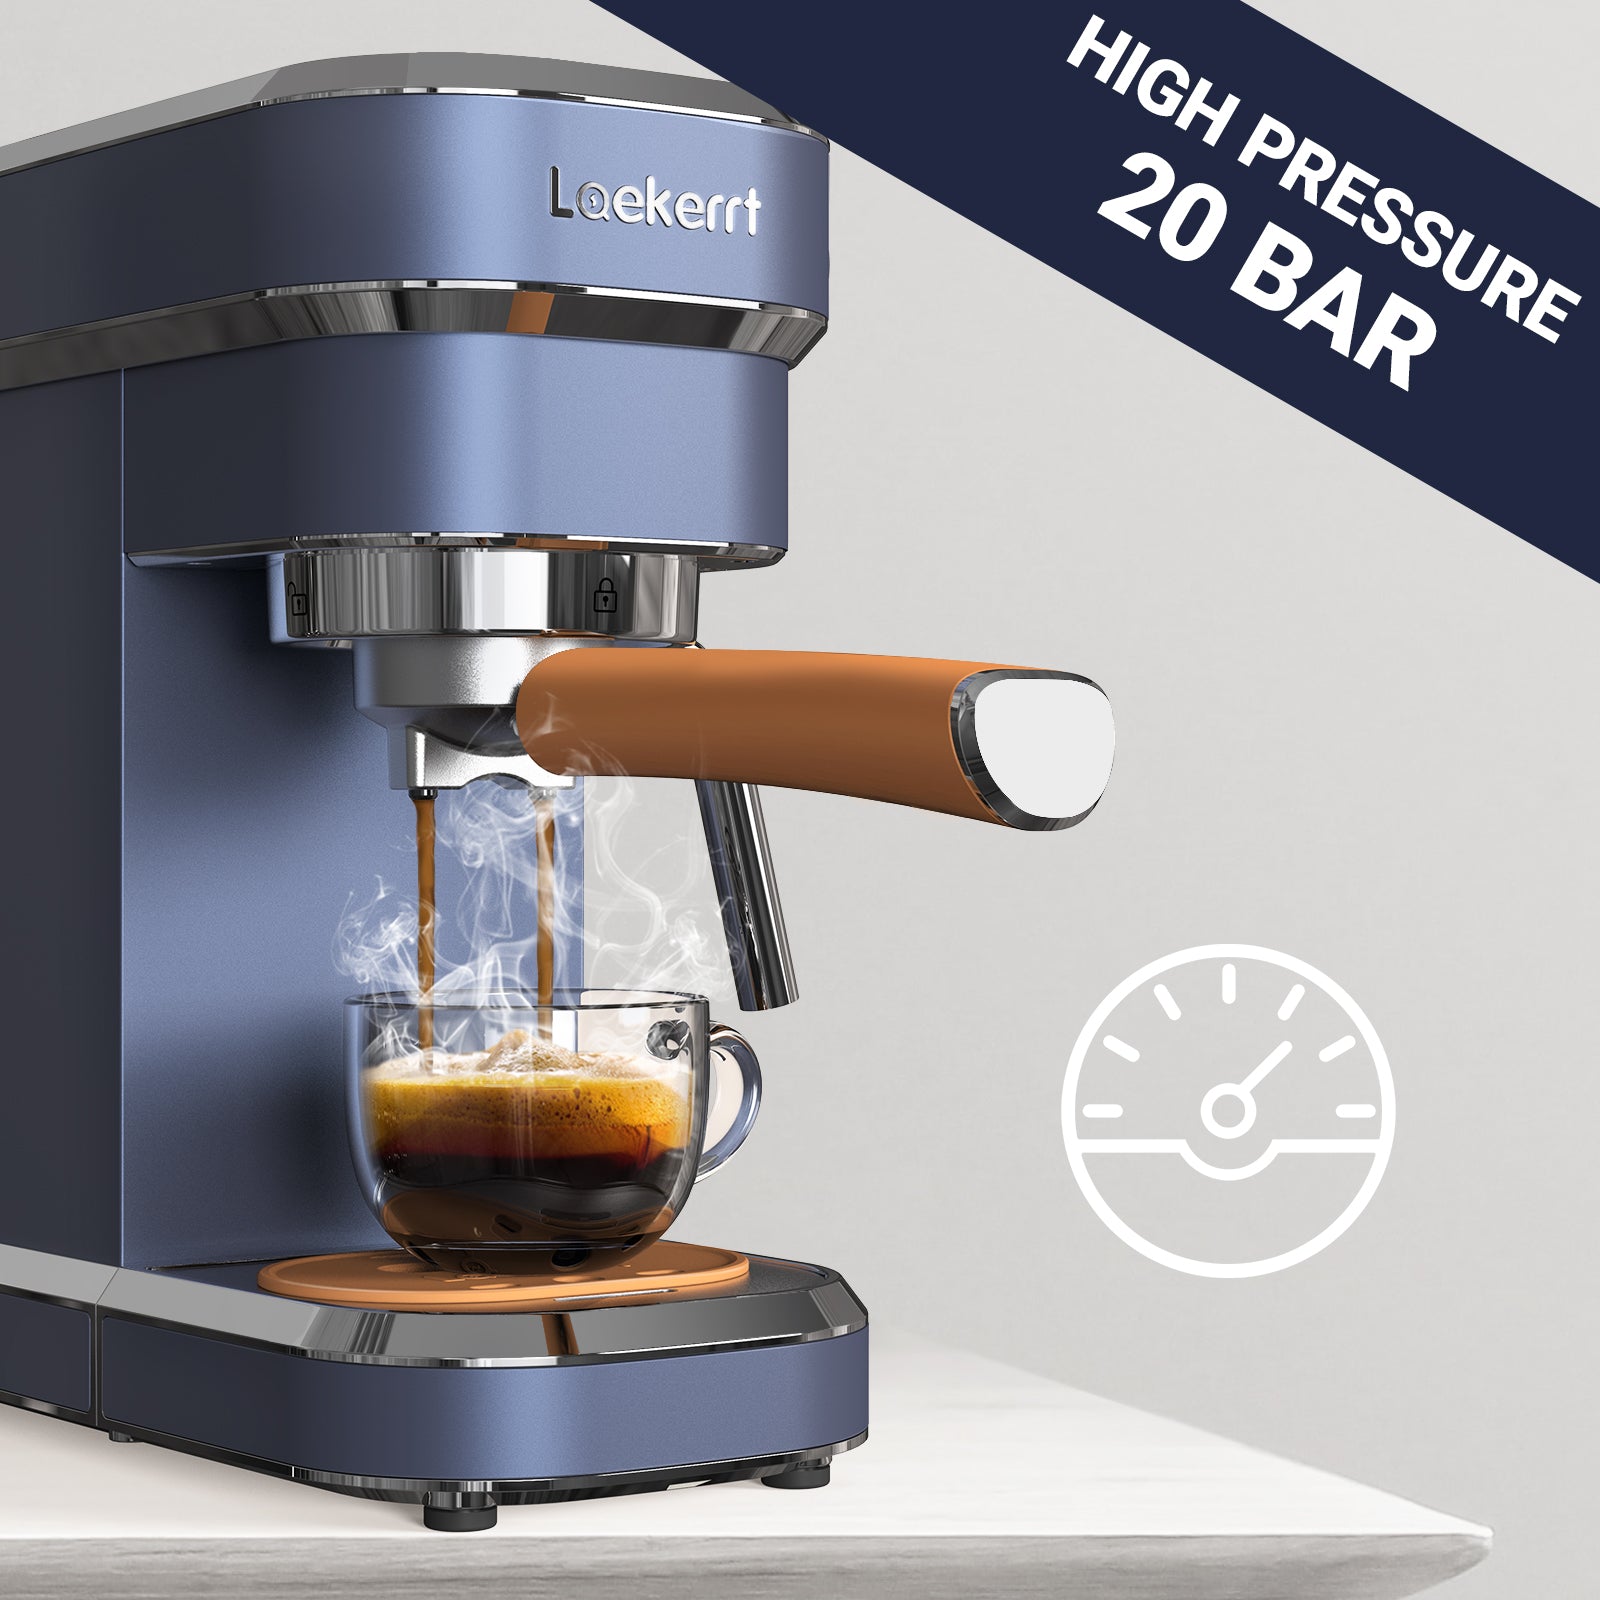 SUMSATY Espresso Coffee Machine 20 Bar Retro Espresso Maker with